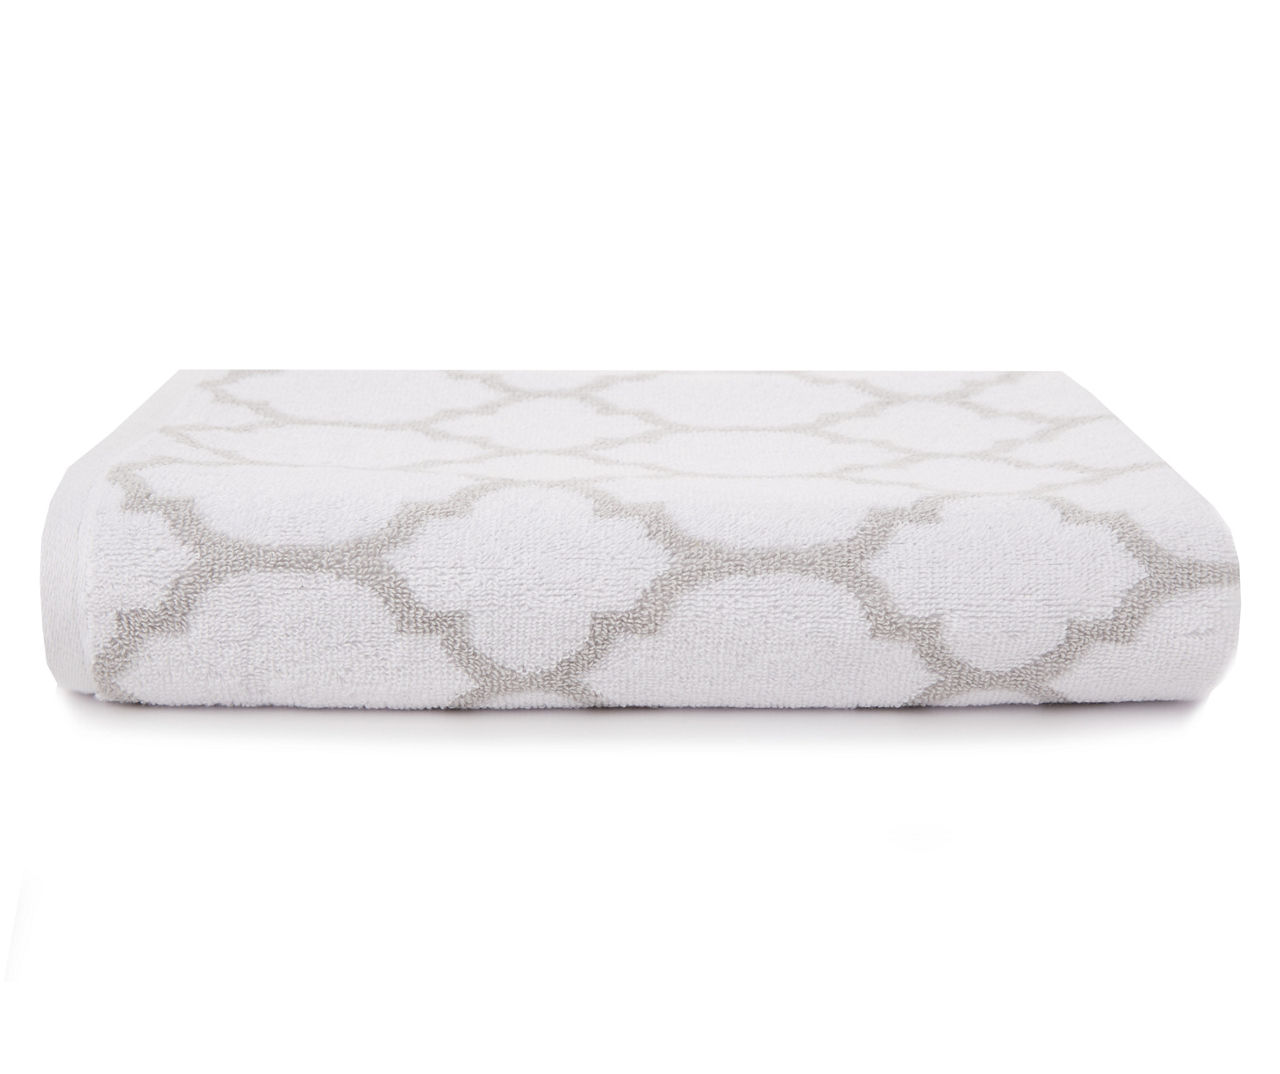 Bright White & Gray Violet Trellis Jacquard Bath Towel